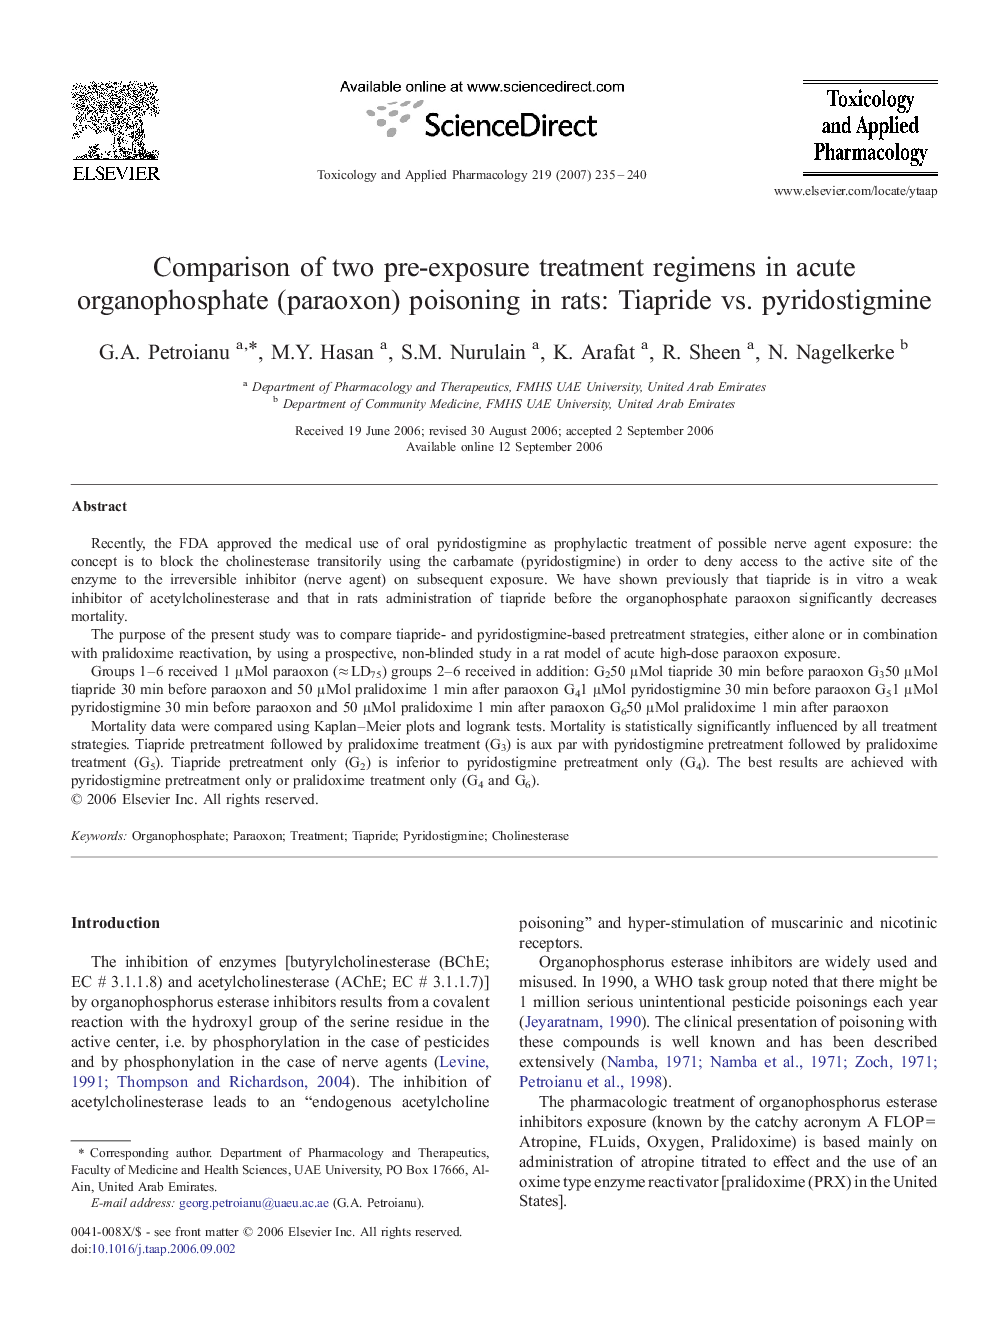 Comparison of two pre-exposure treatment regimens in acute organophosphate (paraoxon) poisoning in rats: Tiapride vs. pyridostigmine